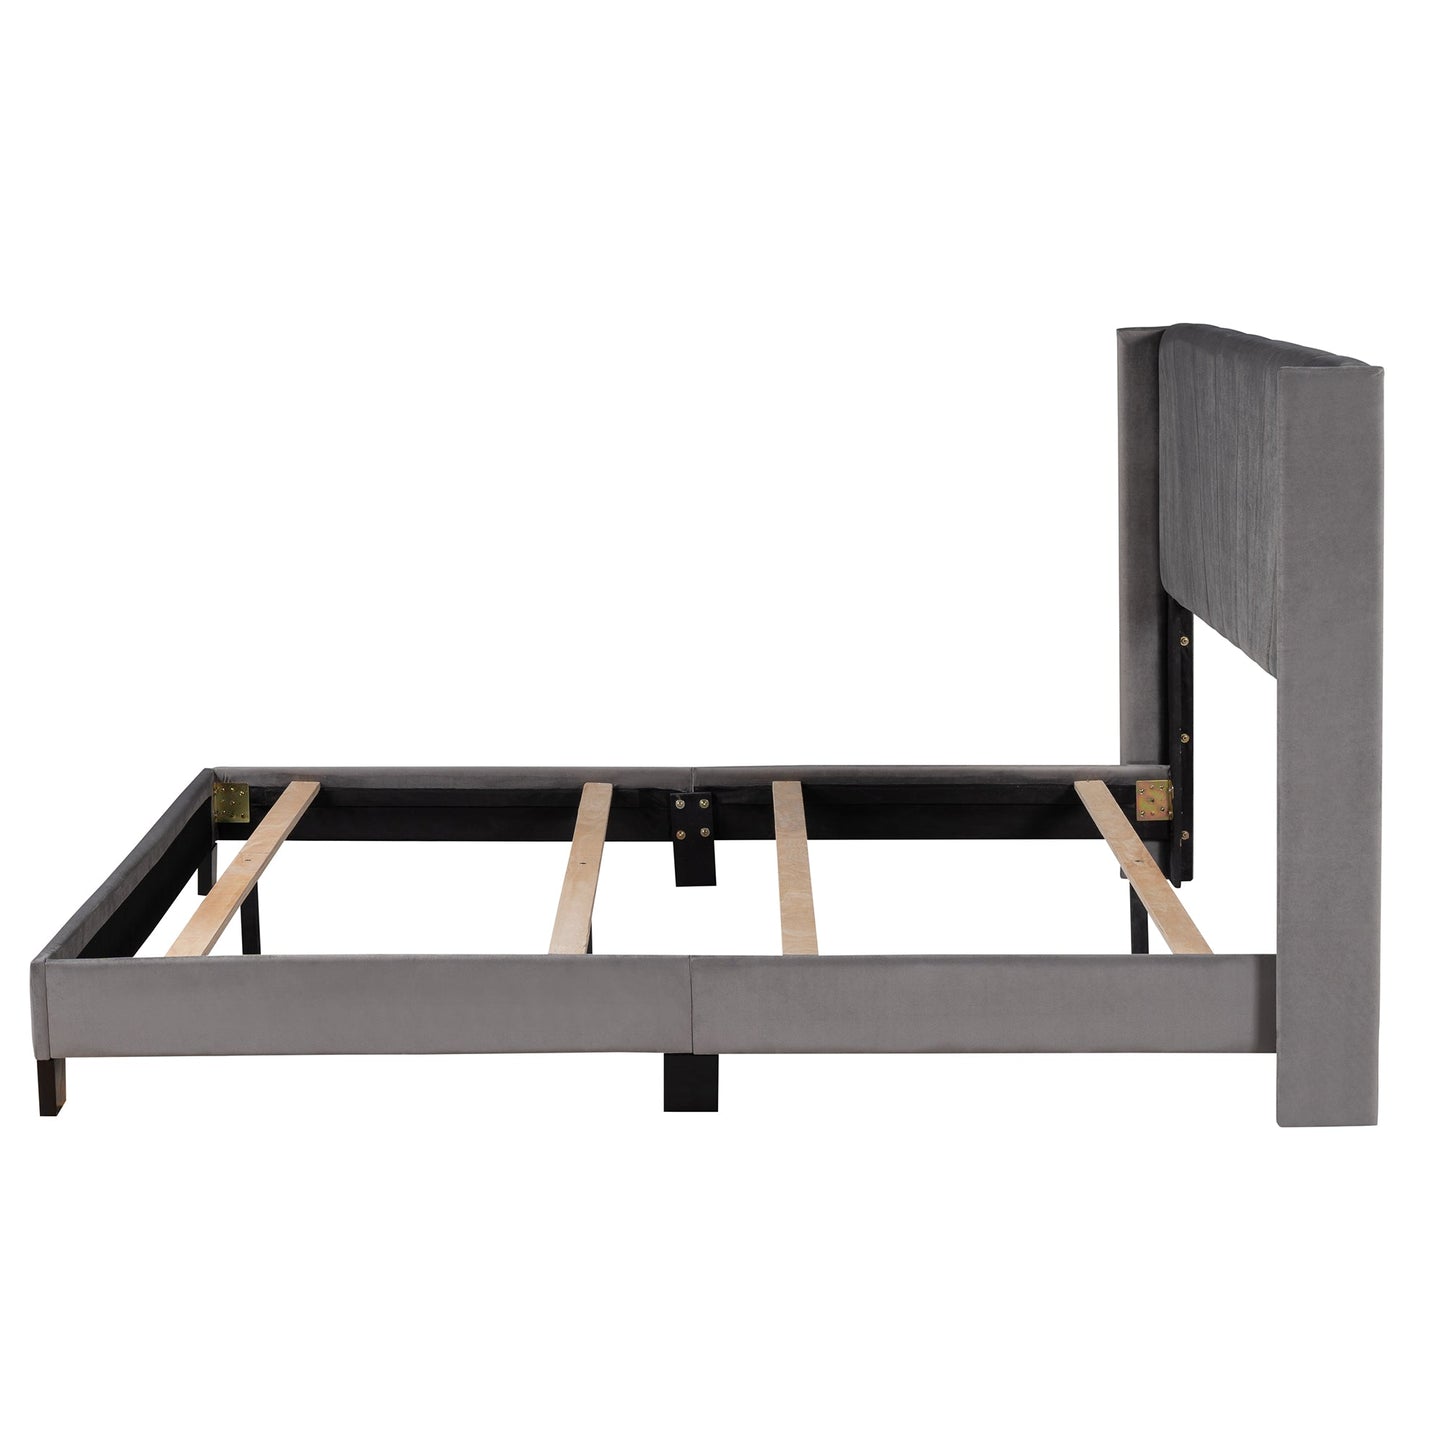 Queen Size Velvet Upholstered Platform Bed, Box Spring Needed - Gray - Demine Essentials